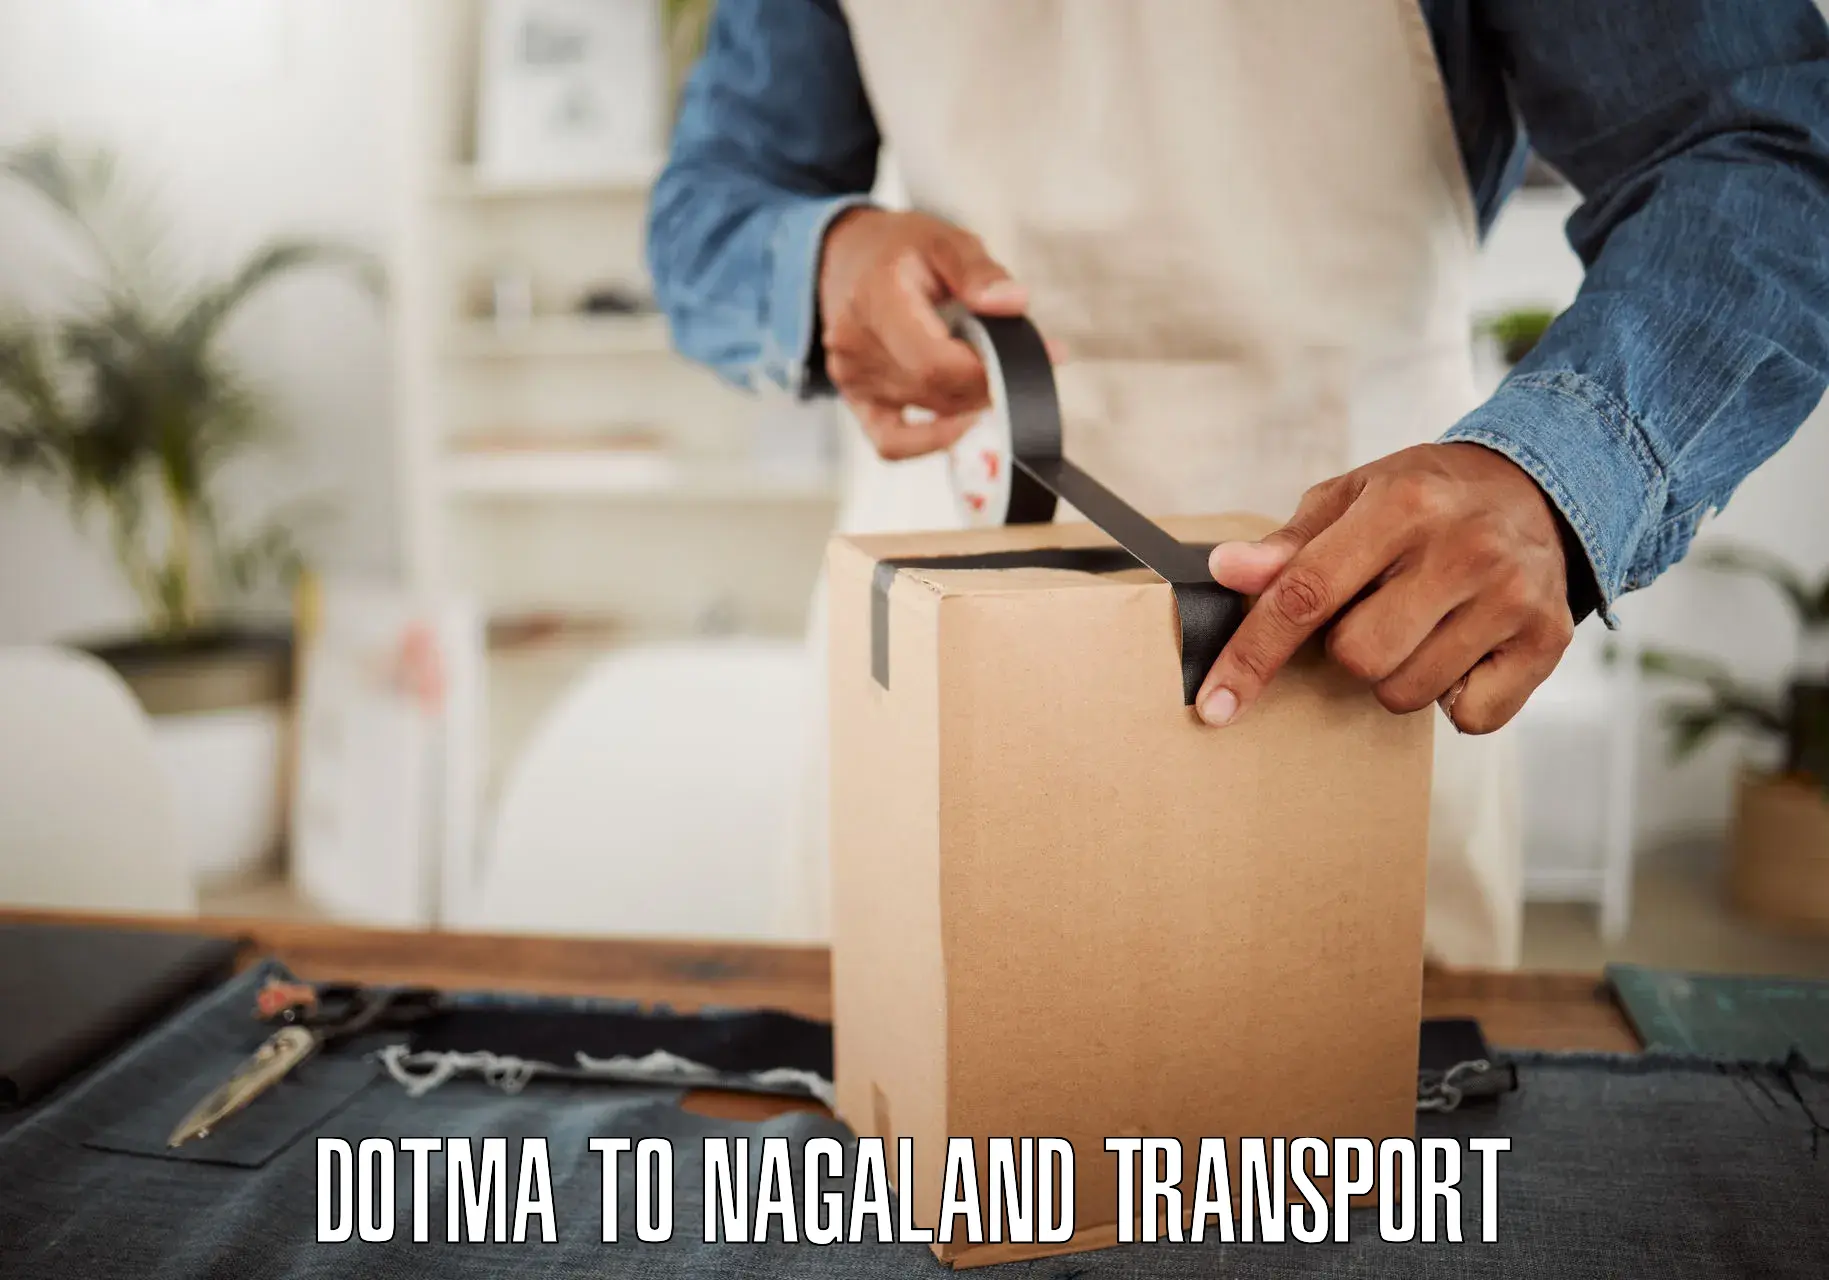 Express transport services Dotma to Nagaland